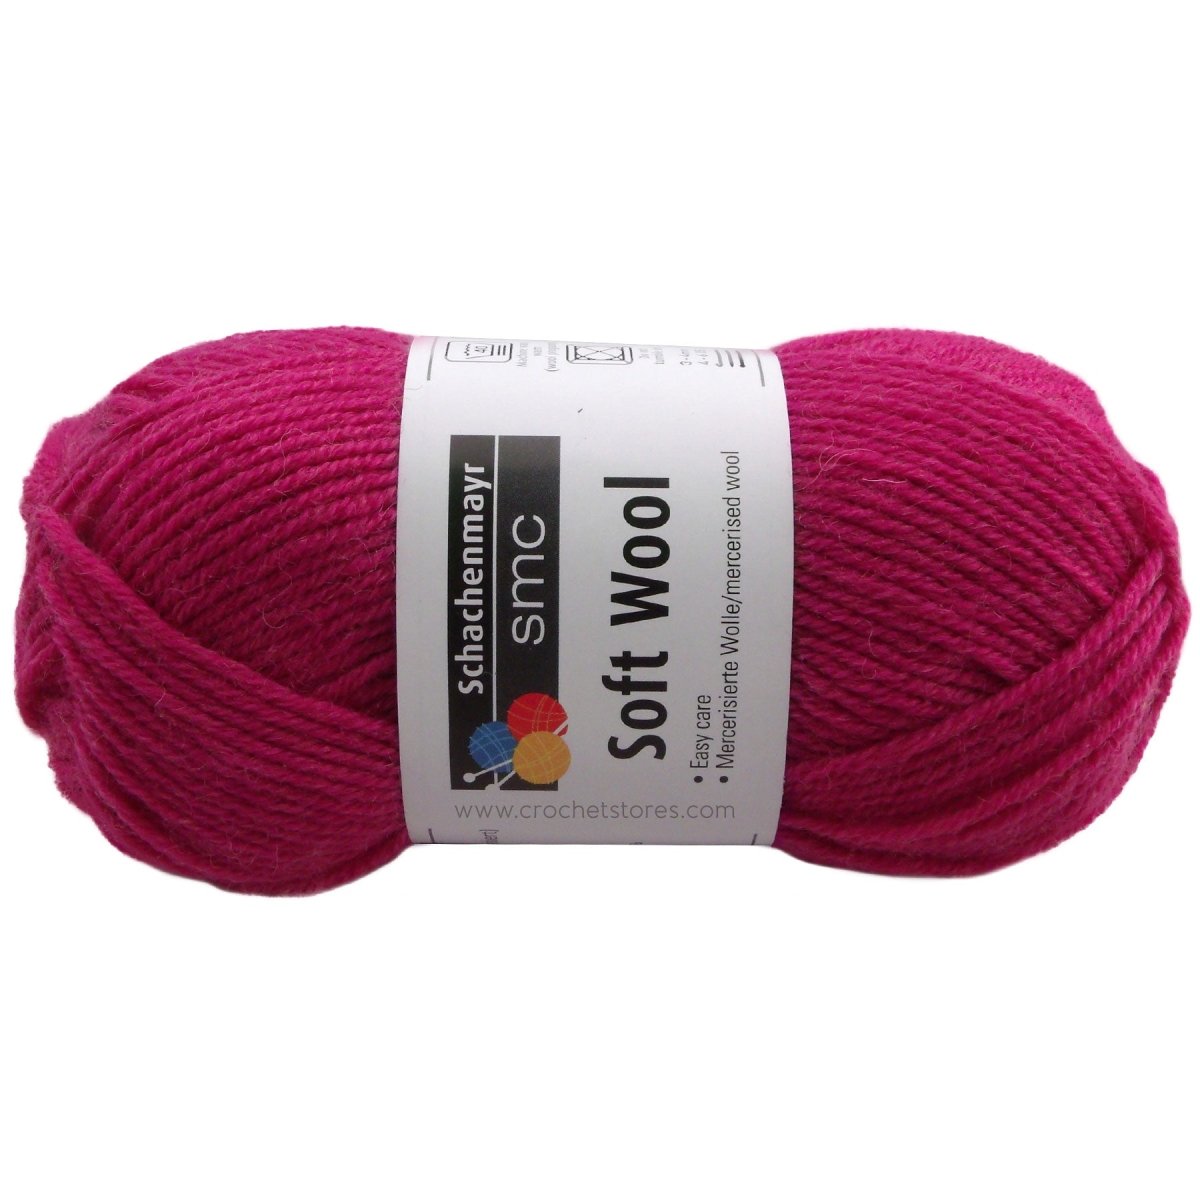 SOFT WOOL - Crochetstores9807536-364082700938322